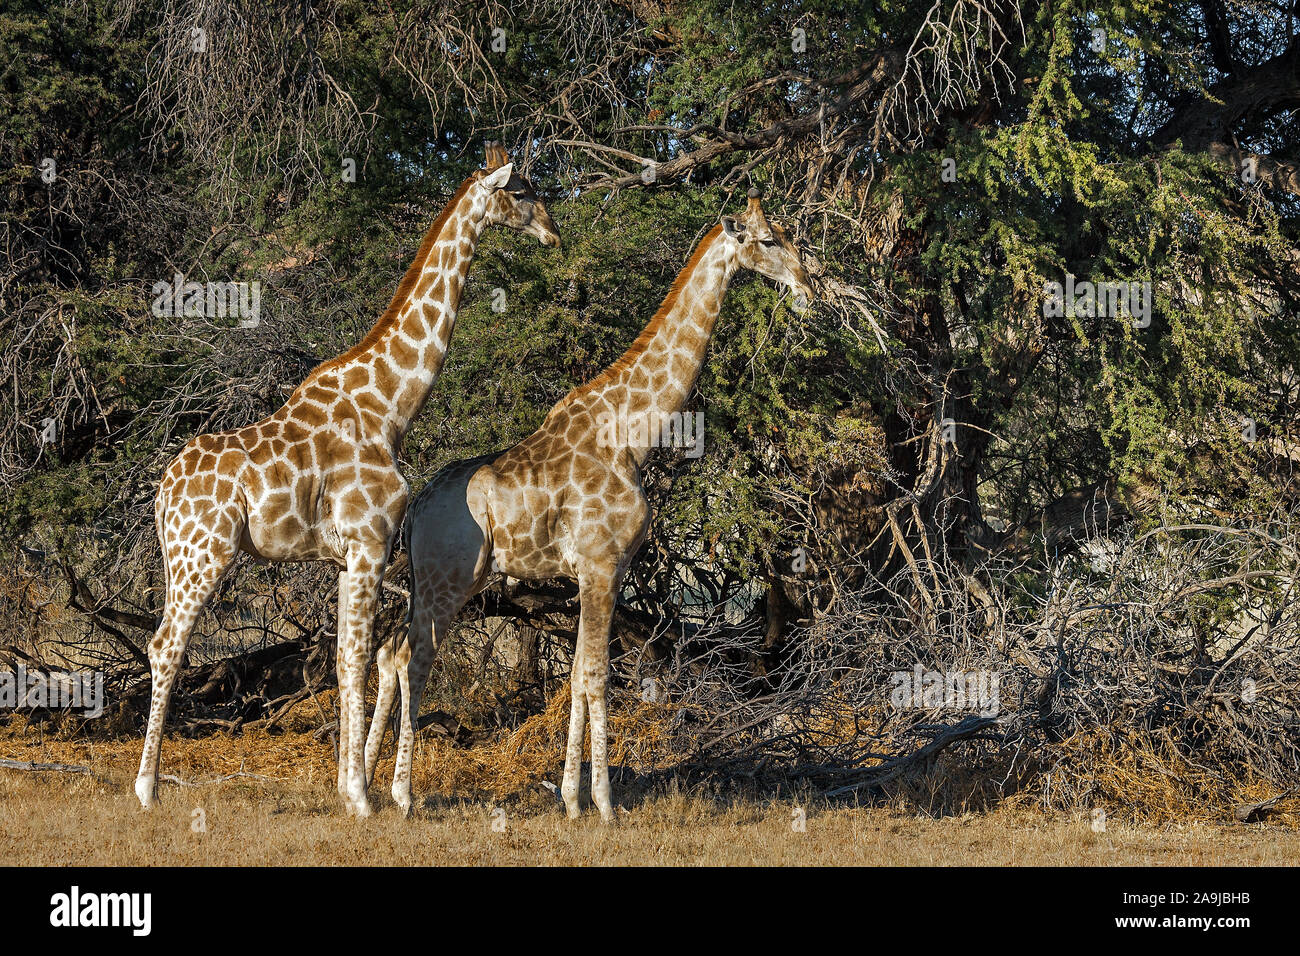 Thomicroft-Giraffen (Giraffa camelopardalis) Stock Photo